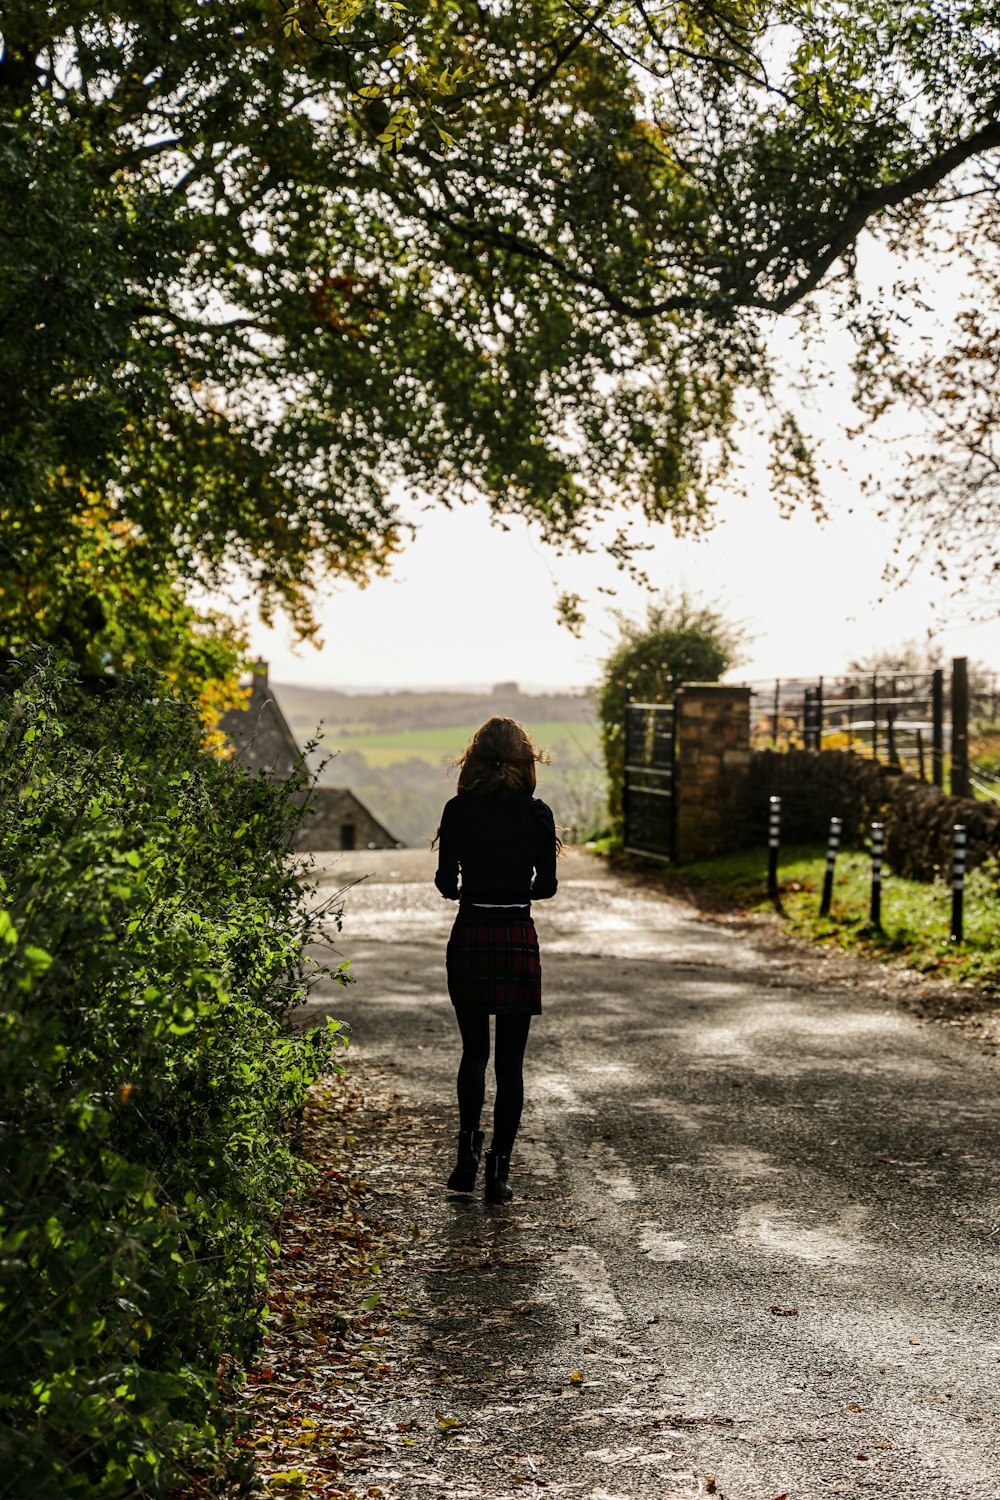 a woman walking down a dirt road next to a lush green field